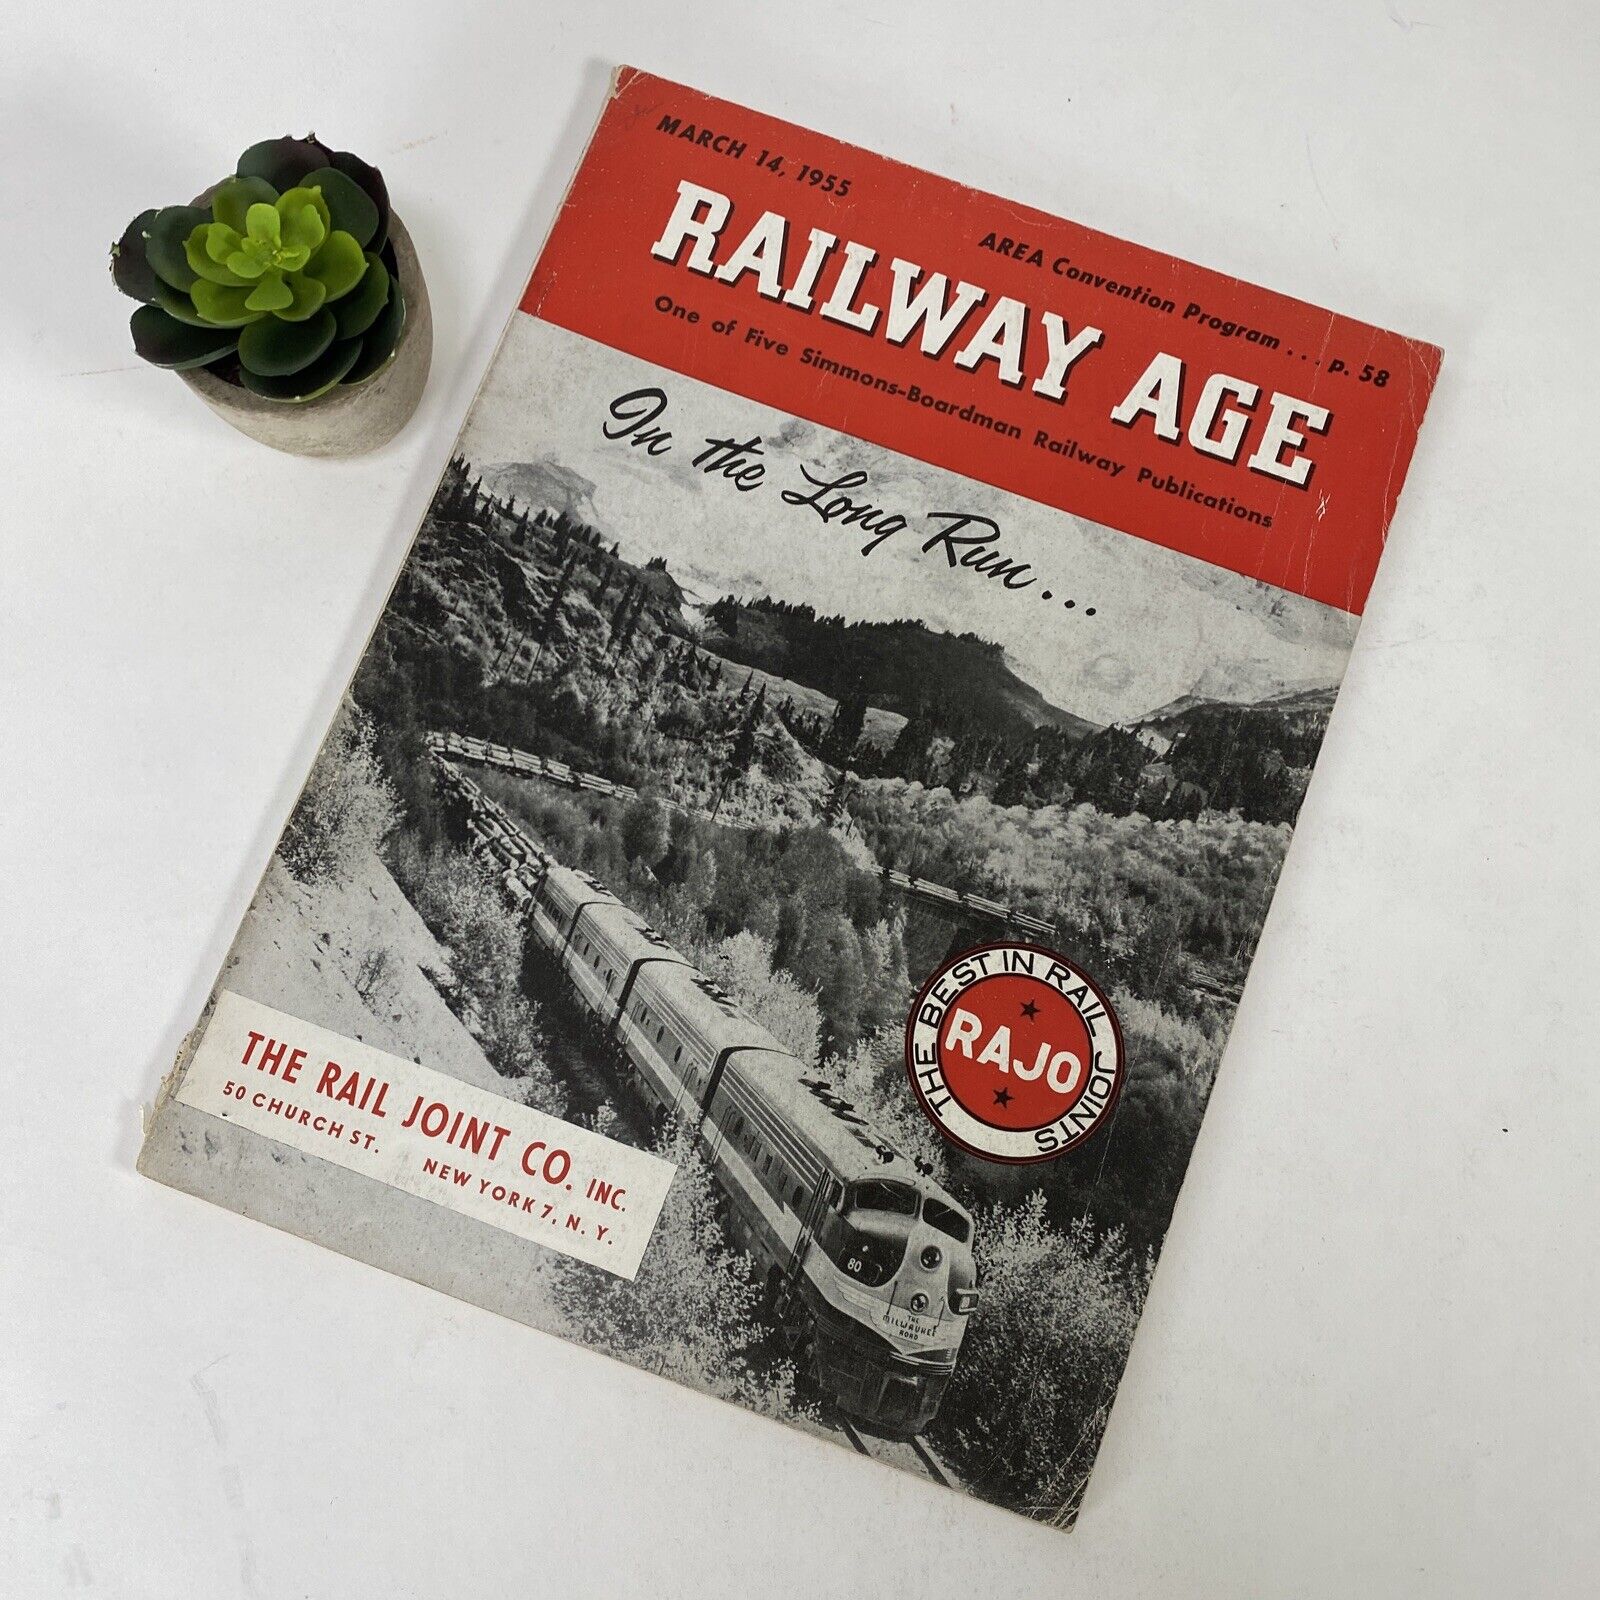 1955 Railway Age, Simmons-Boardman Railway Magazine, The Rail Joint Co.